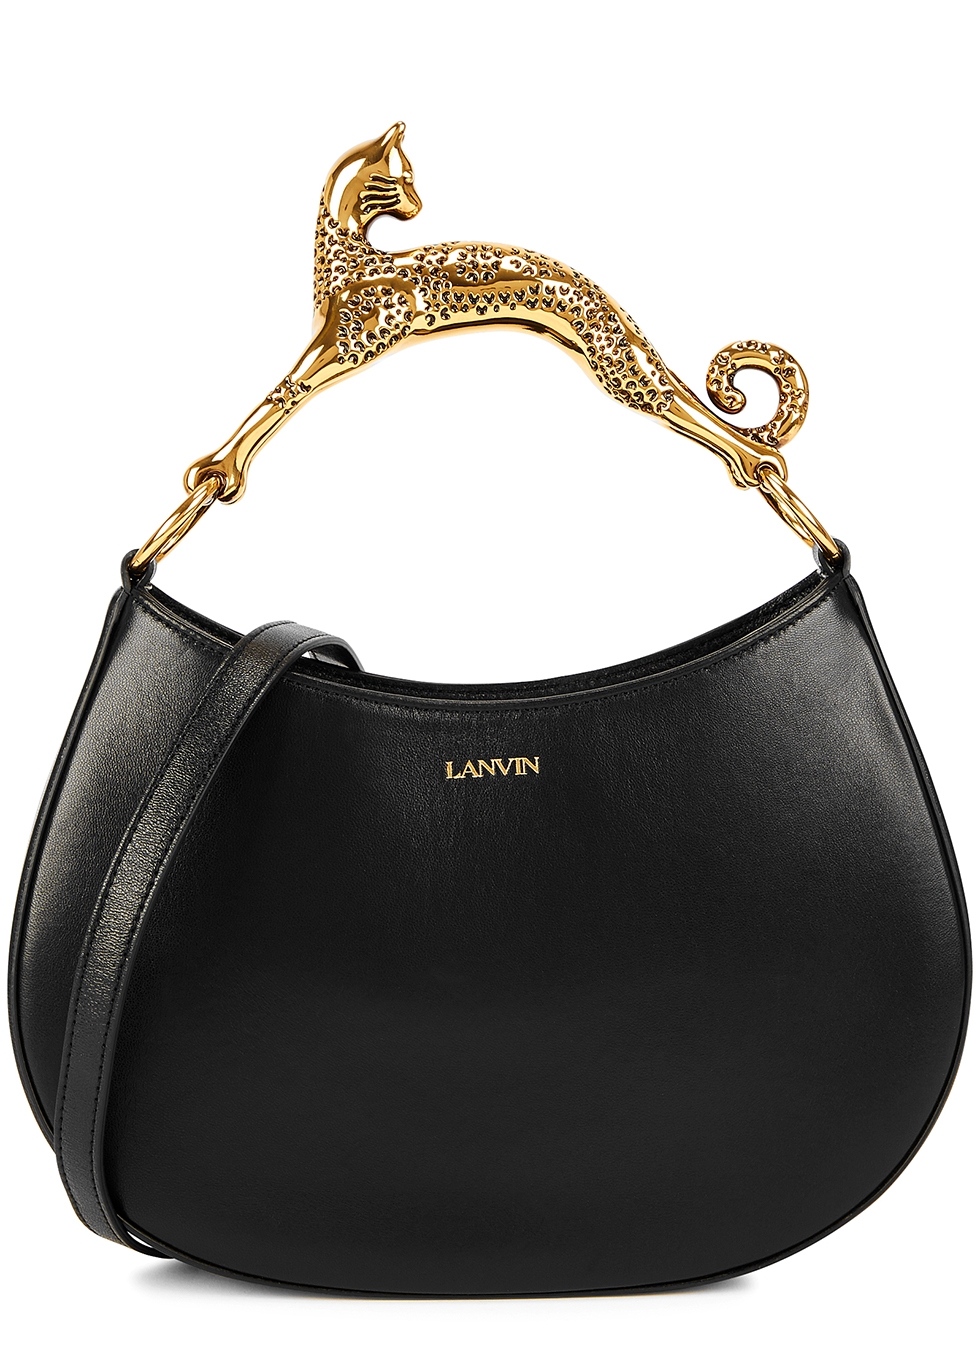 Lanvin Hobo Cat large leather top handle bag - Harvey Nichols